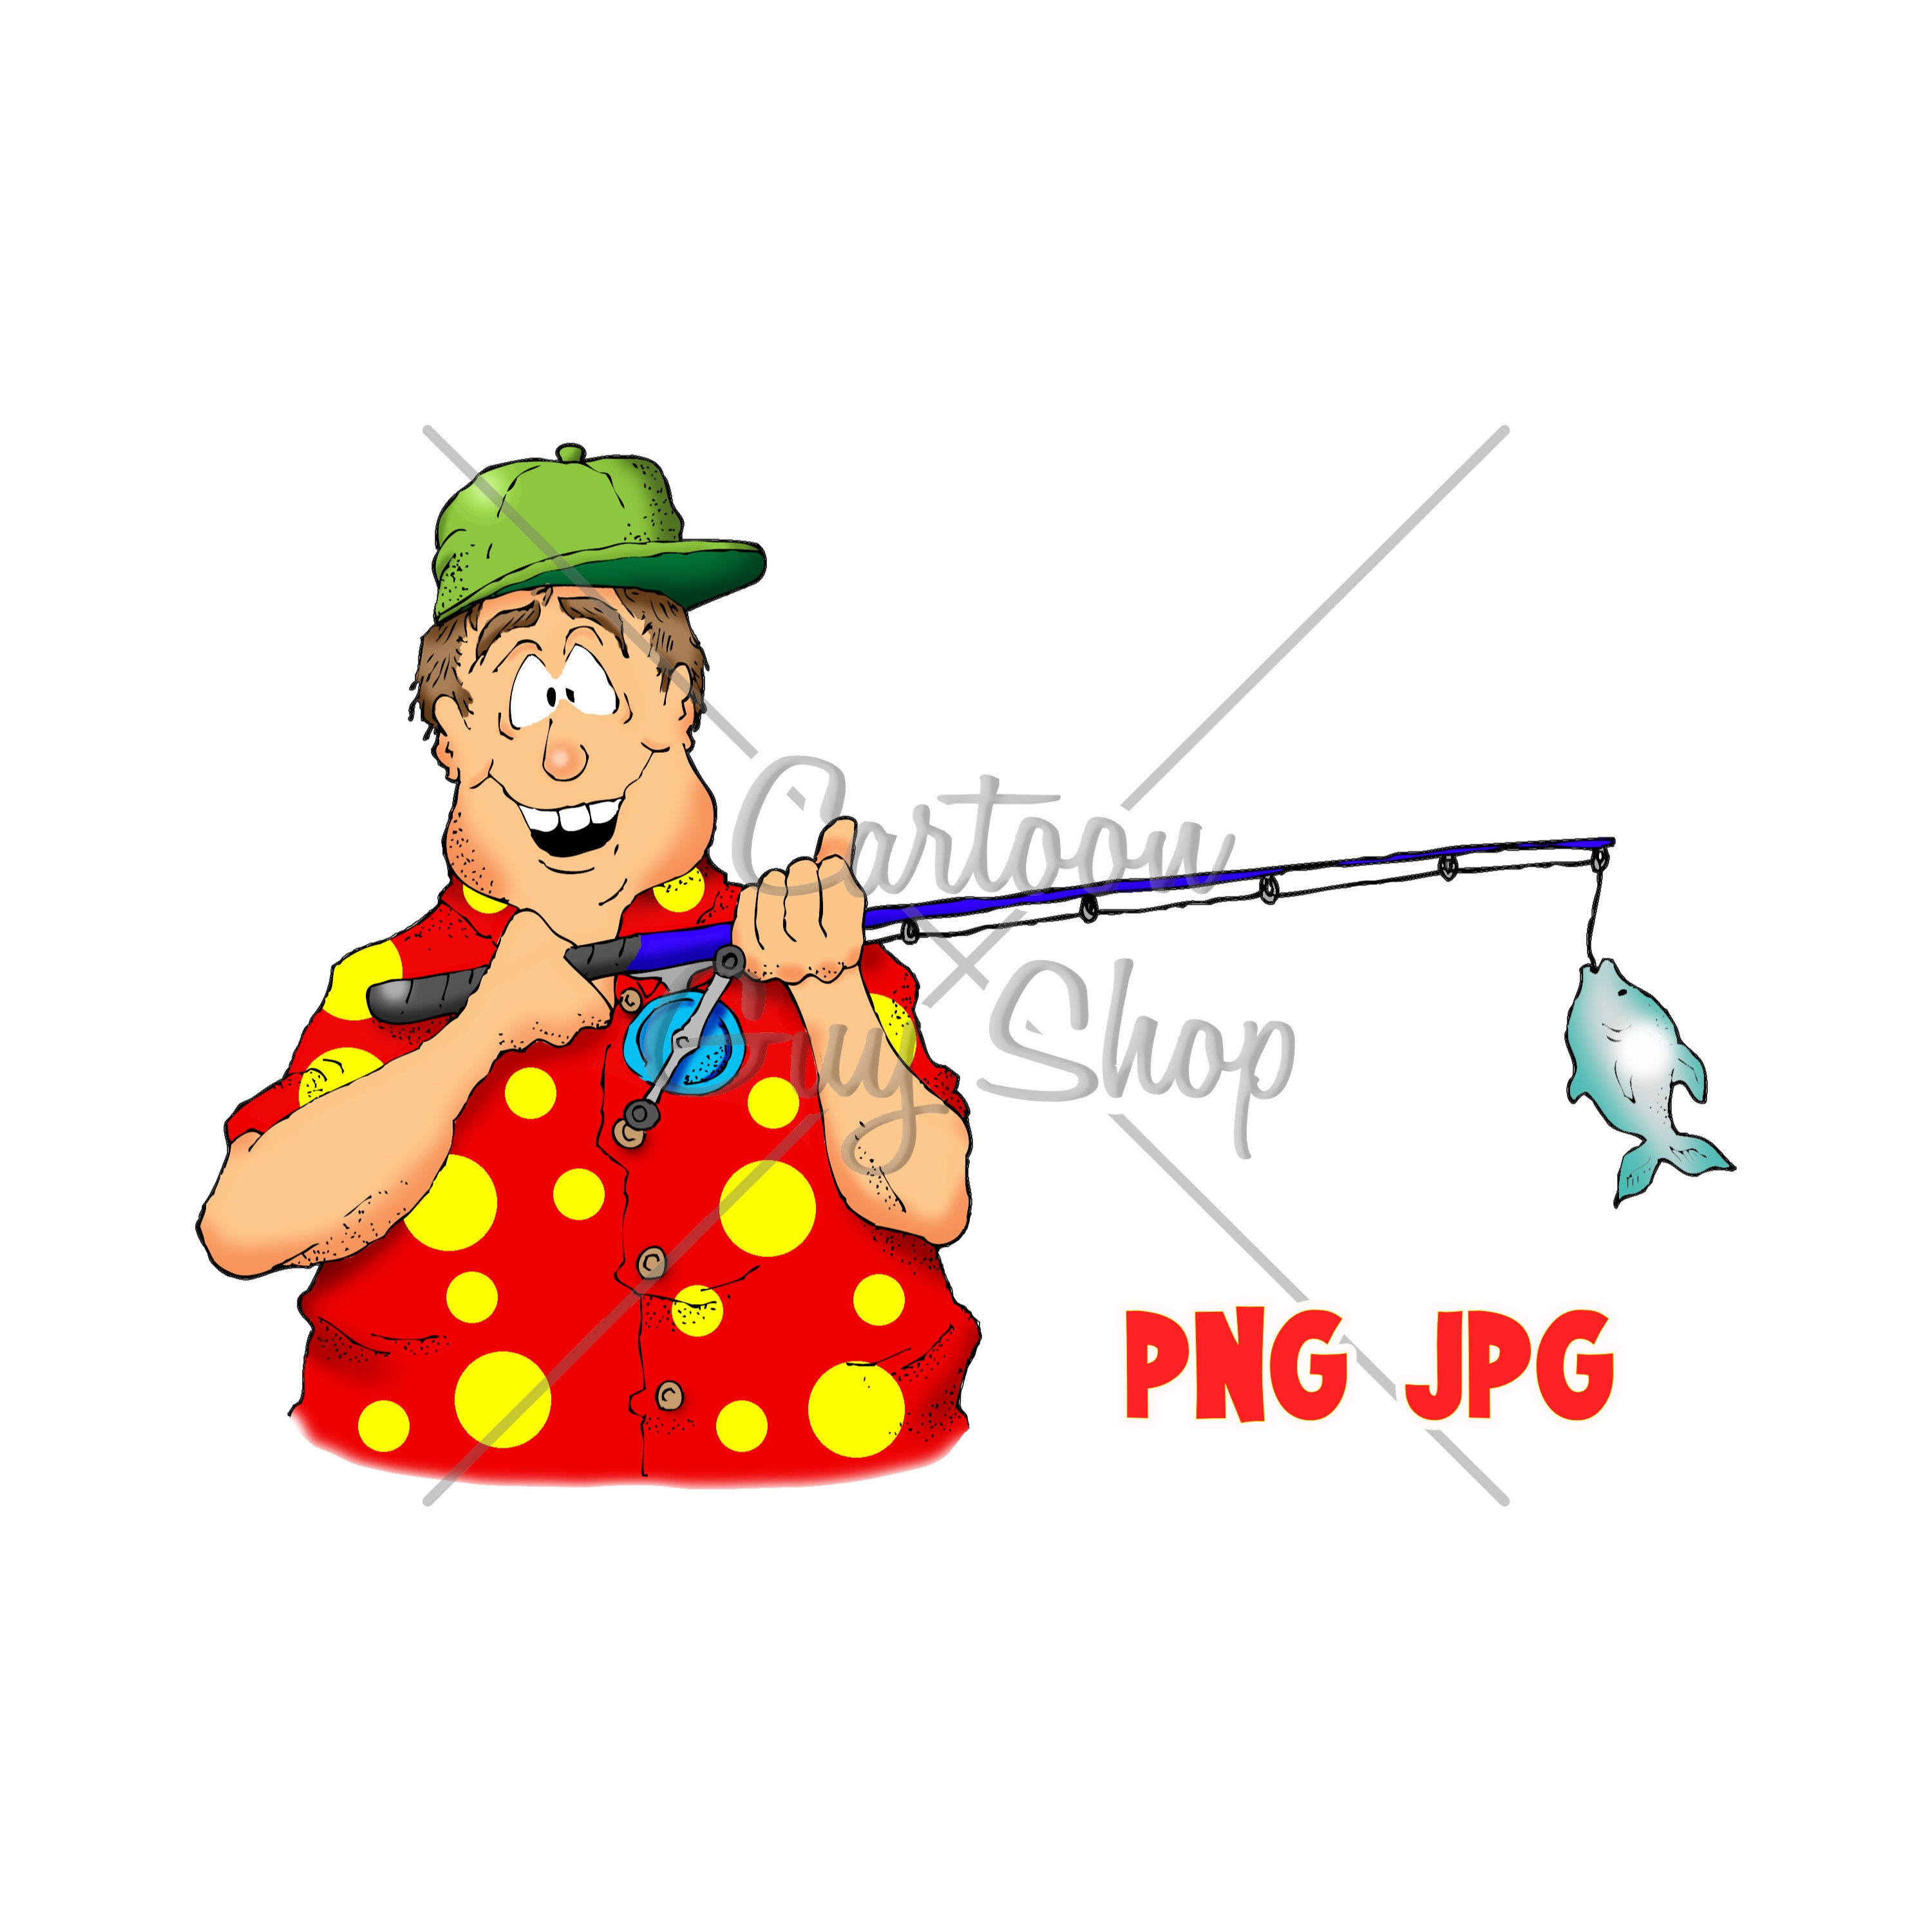 Happy Fisherman PNG - JPG - Cartoon Fishing Clipart - Digital Download.